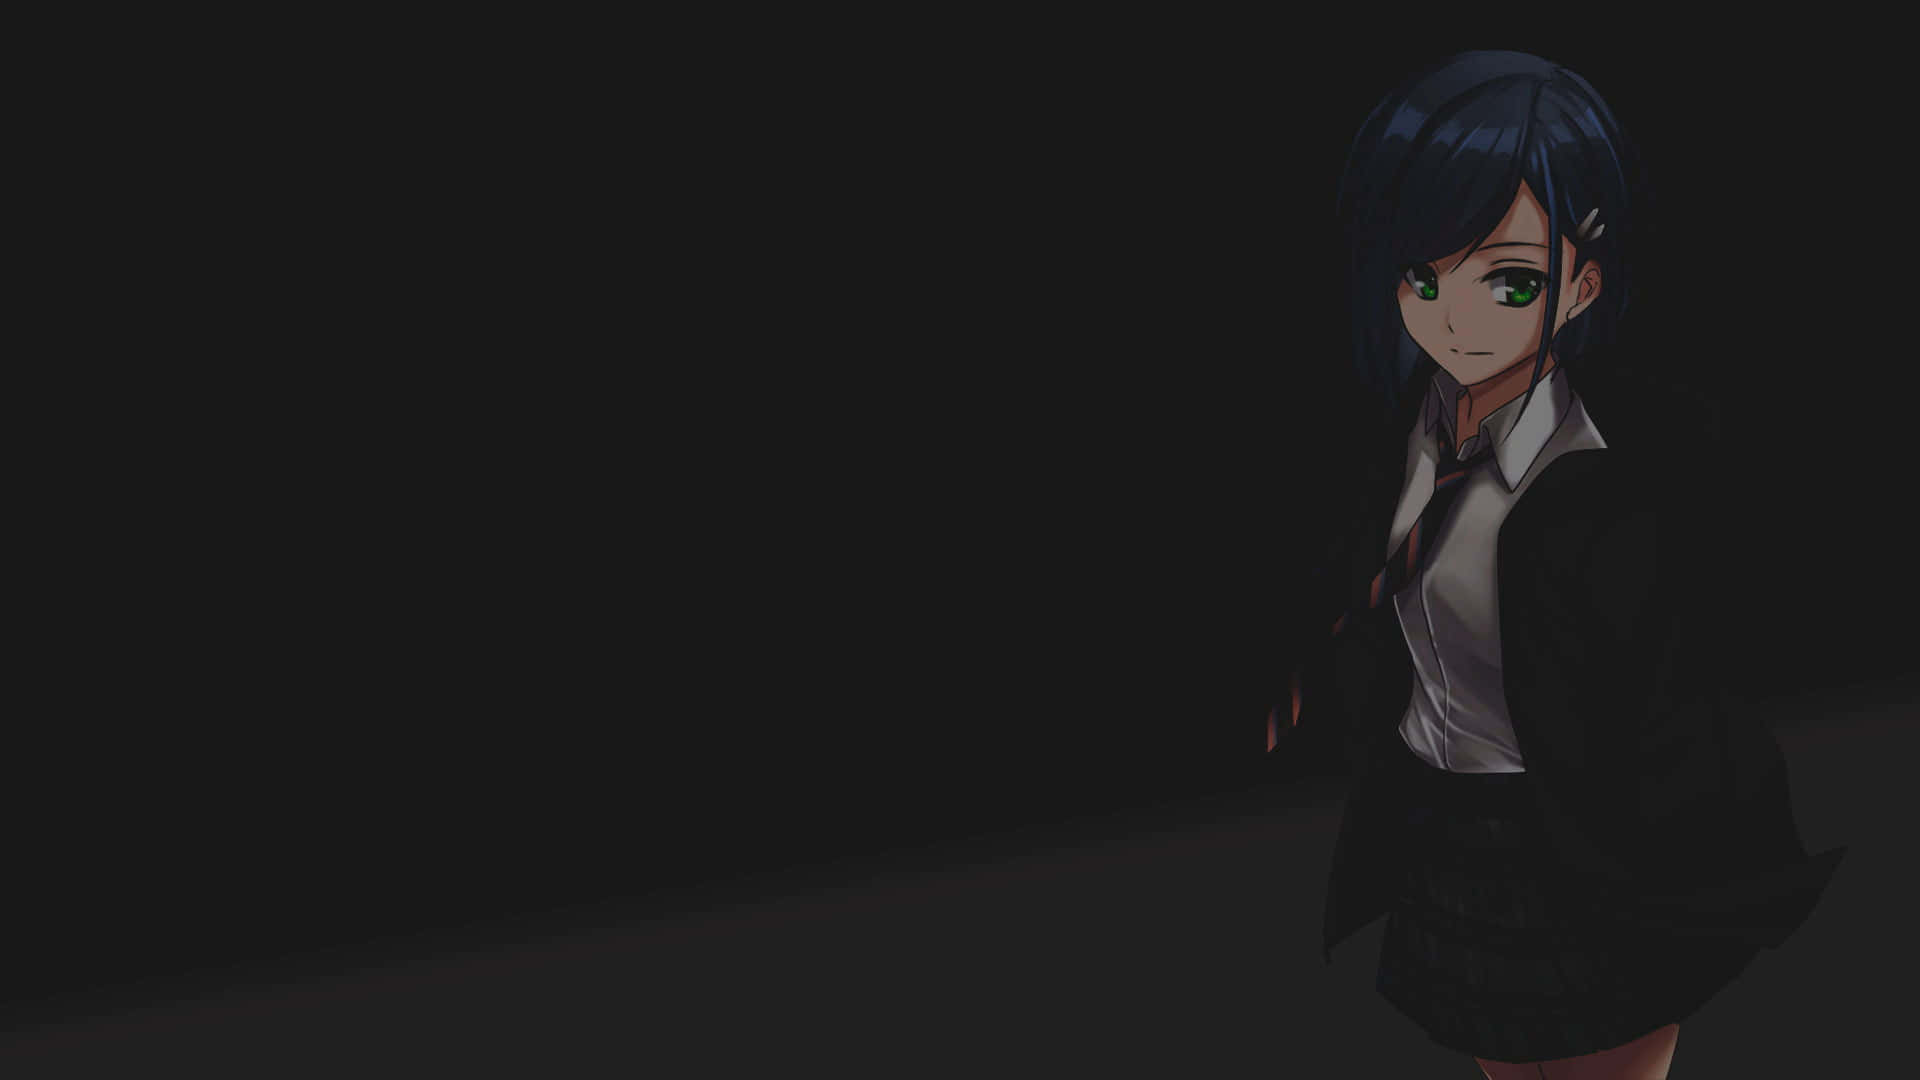 Dark Anime Girl with Big Eyes Wallpaper